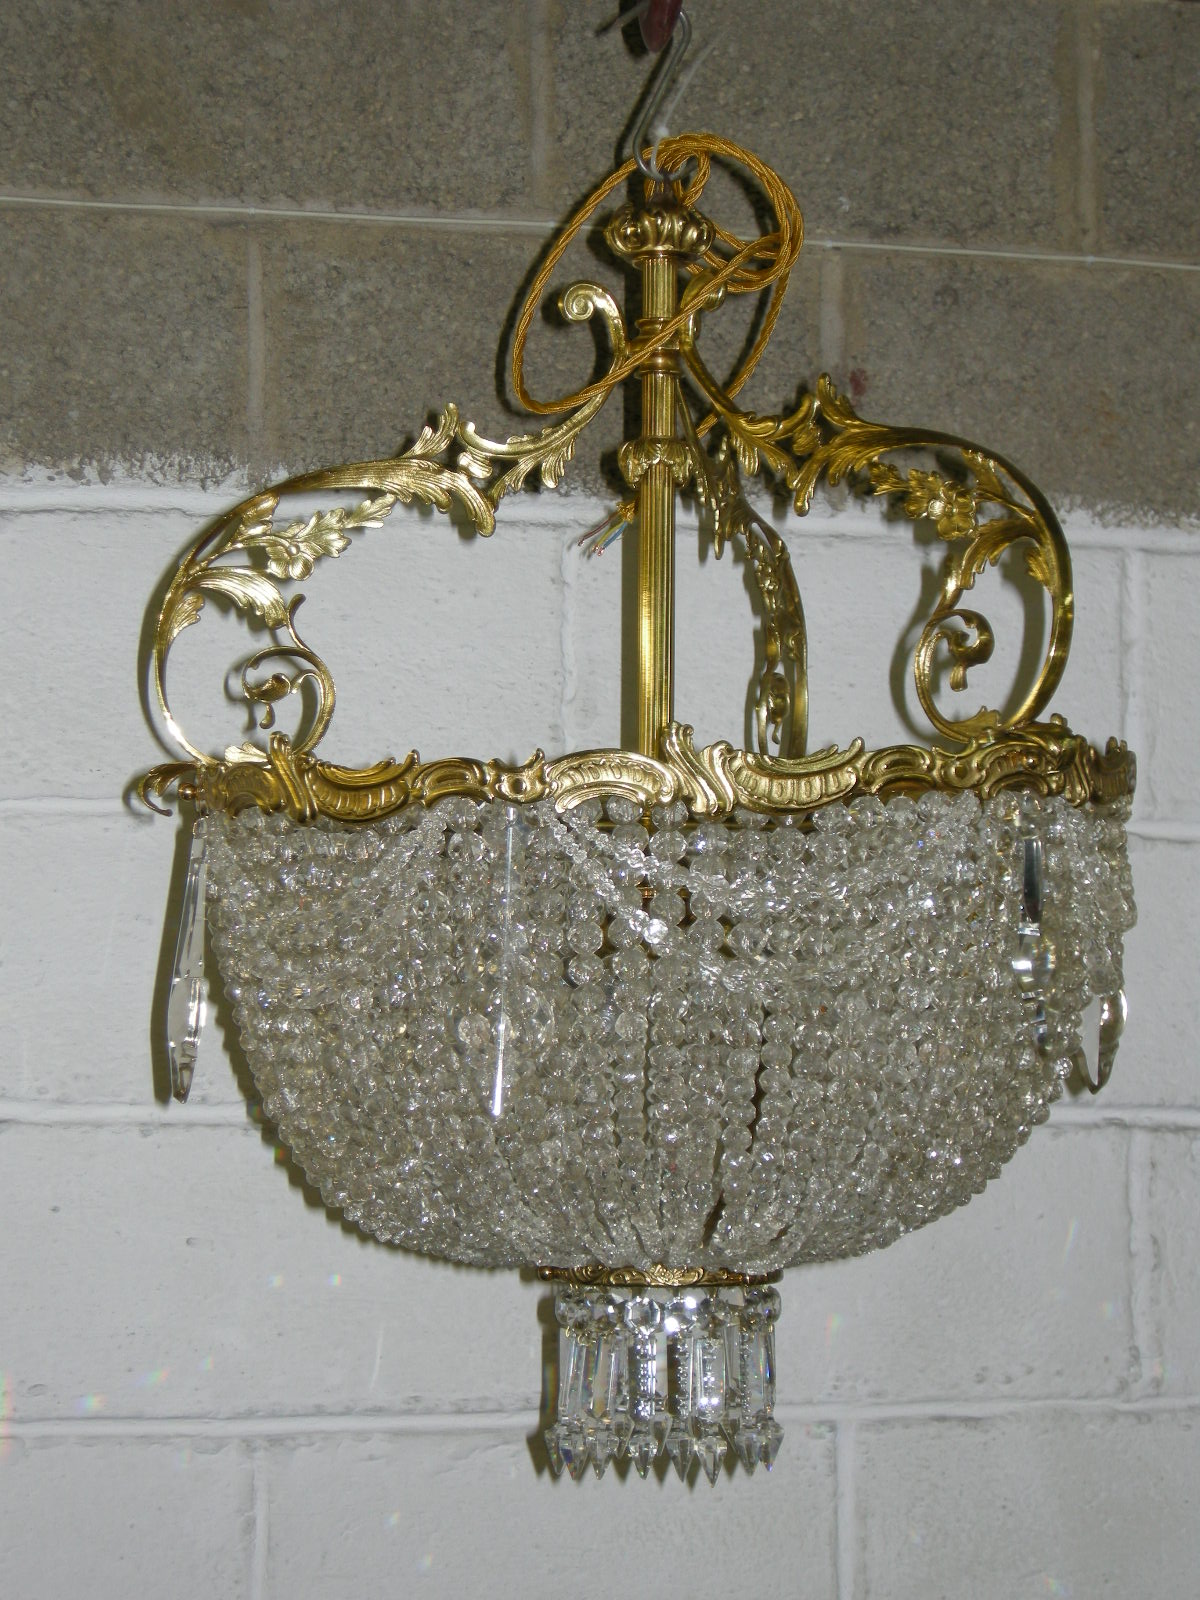 brass and glass chandelier after restoration